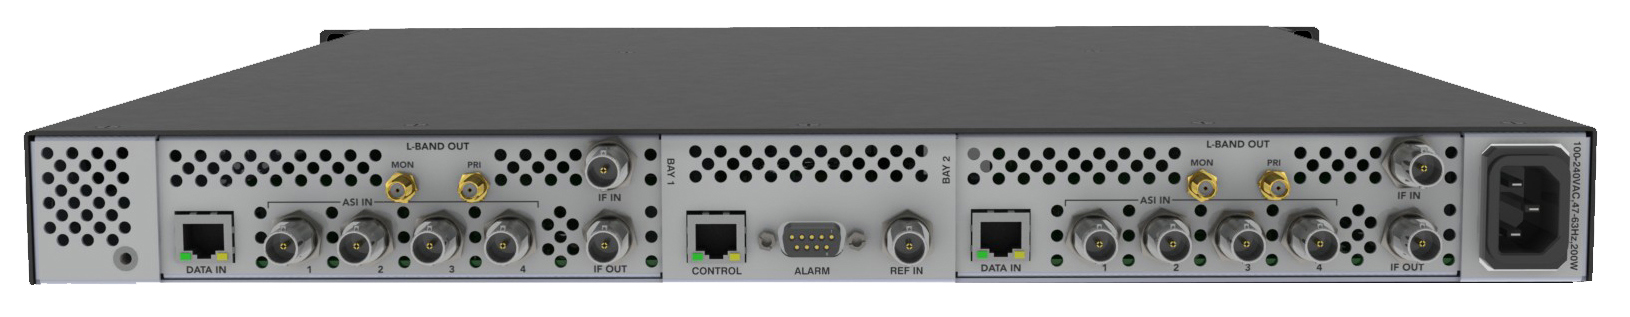 Sencore SMD 989 – спутниковый модулятор DVB-S/S2/S2x